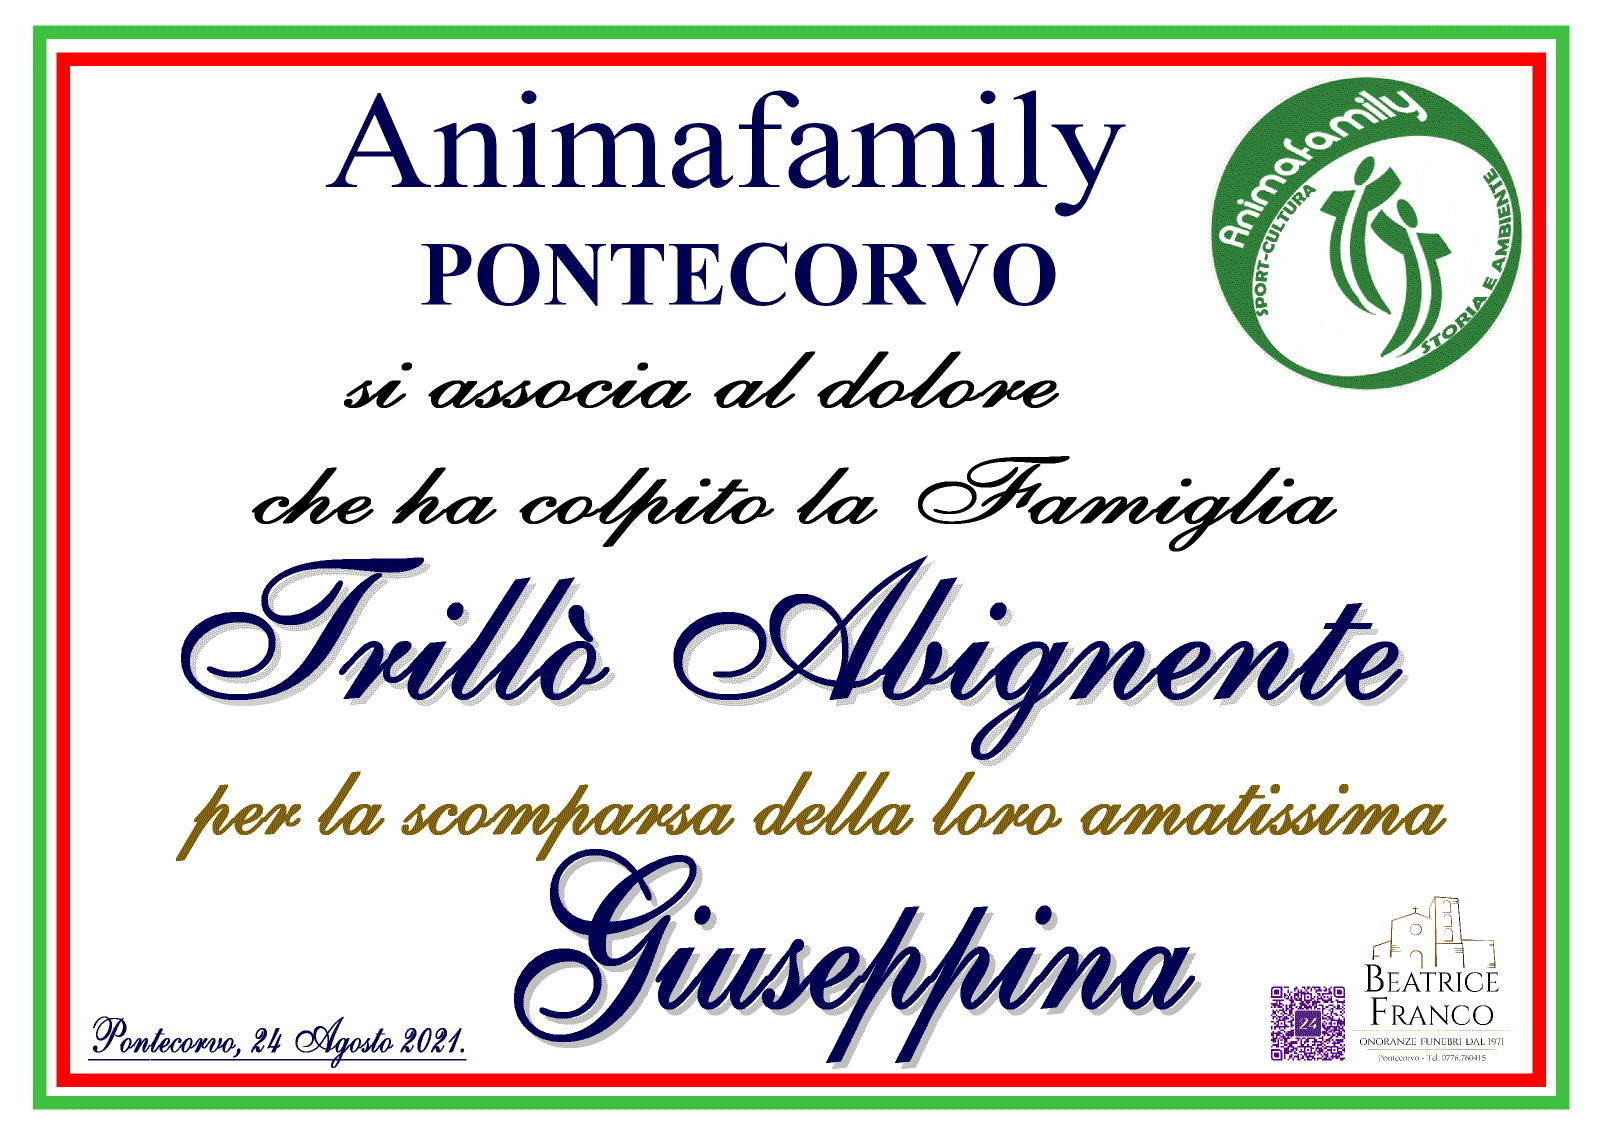 Animafamily Pontecorvo